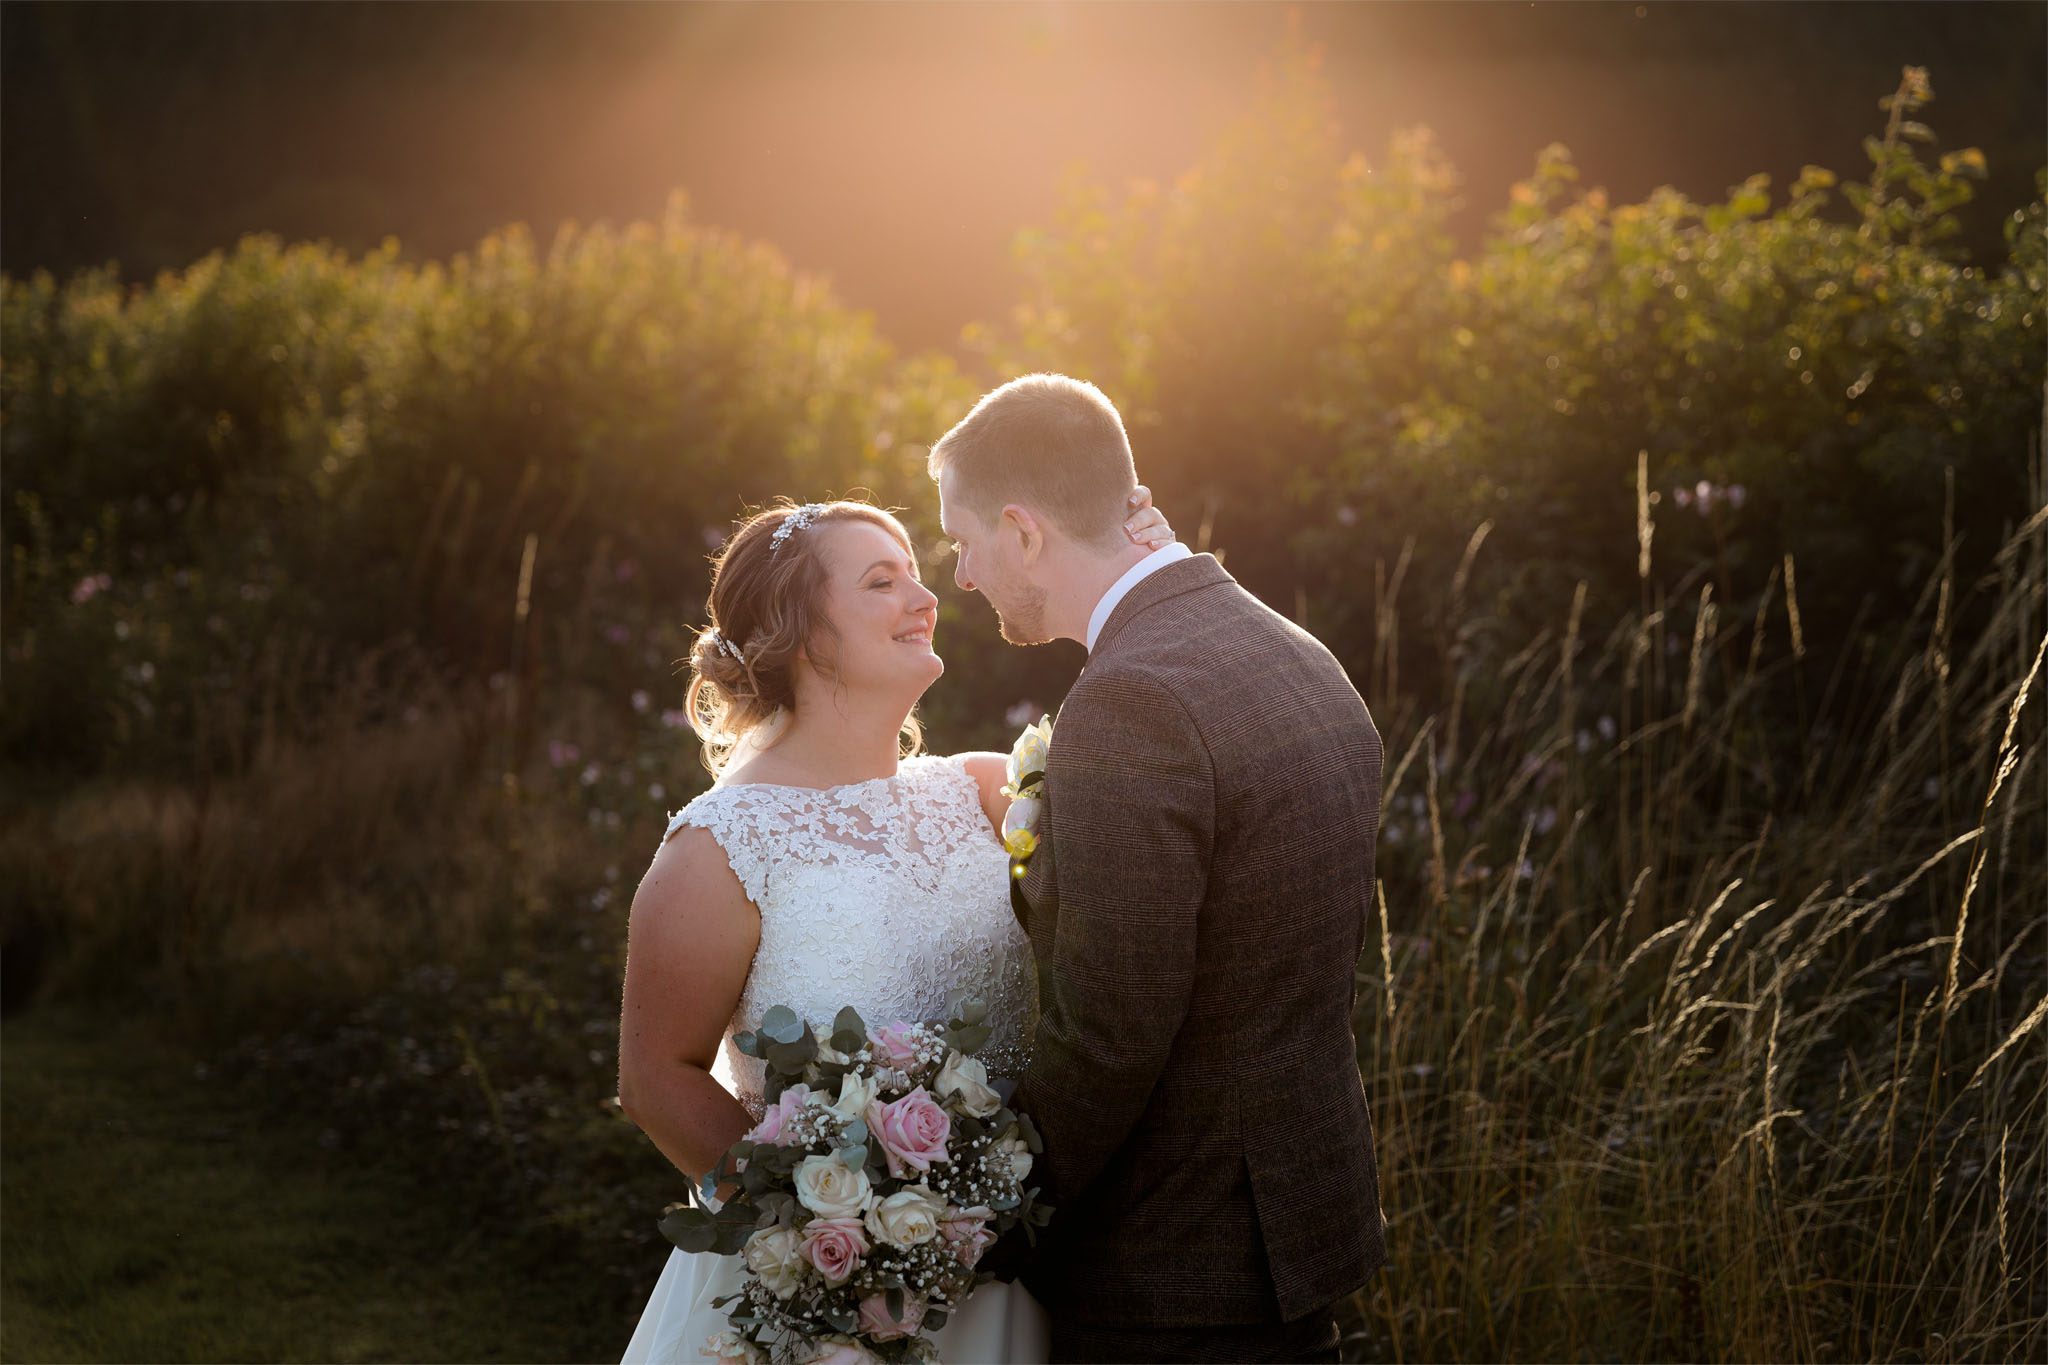 Golden light behind bride and groom